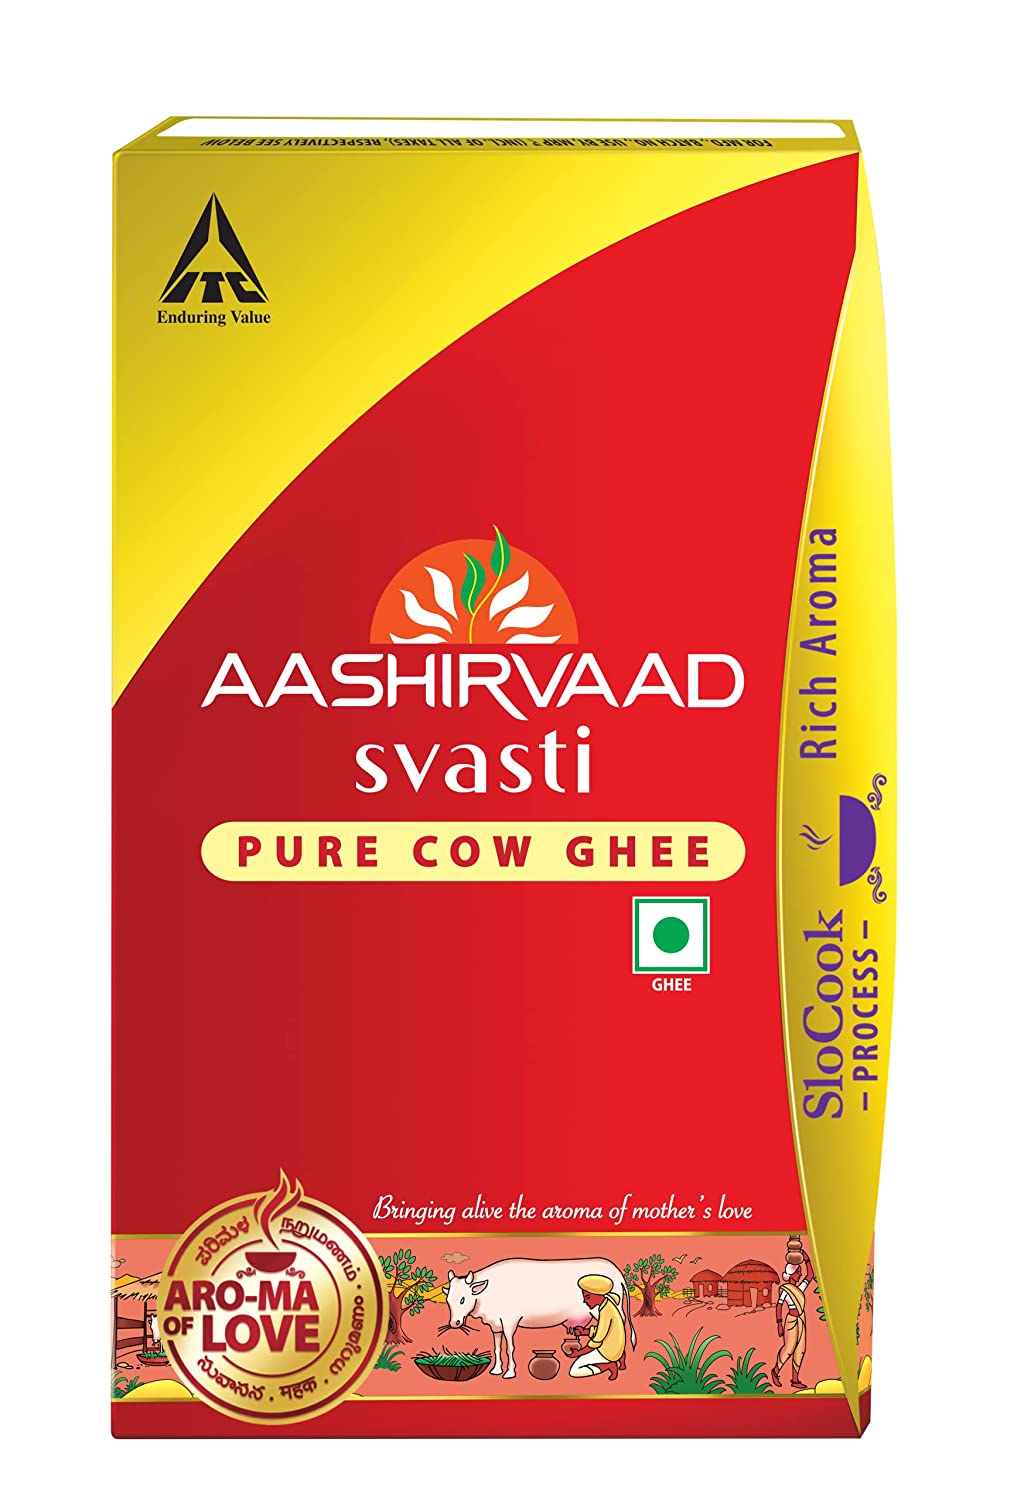 Aashirvaad Svasti Pure Cow Ghee - Desi Ghee with Rich Aroma - 1L